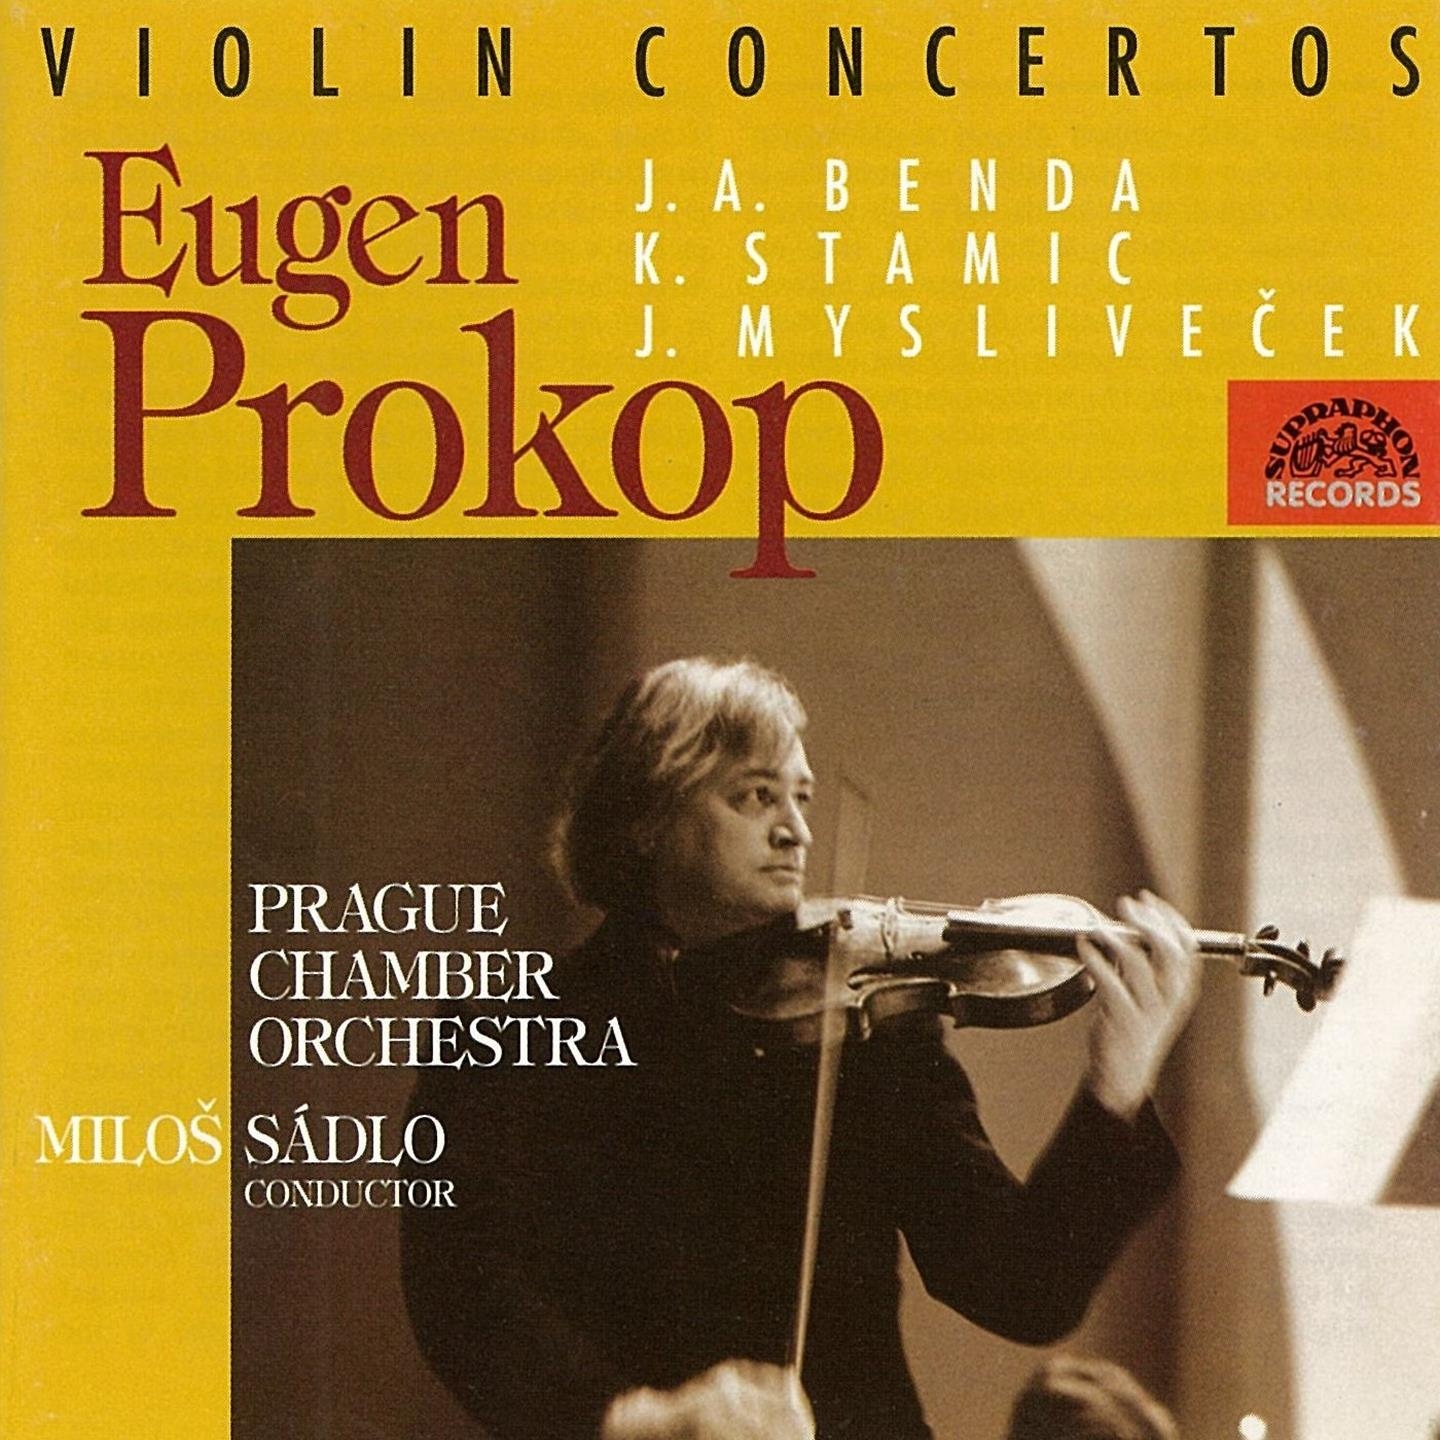 Concerto for Violin and Orchestra in B-Flat Major, .: II. Adagio